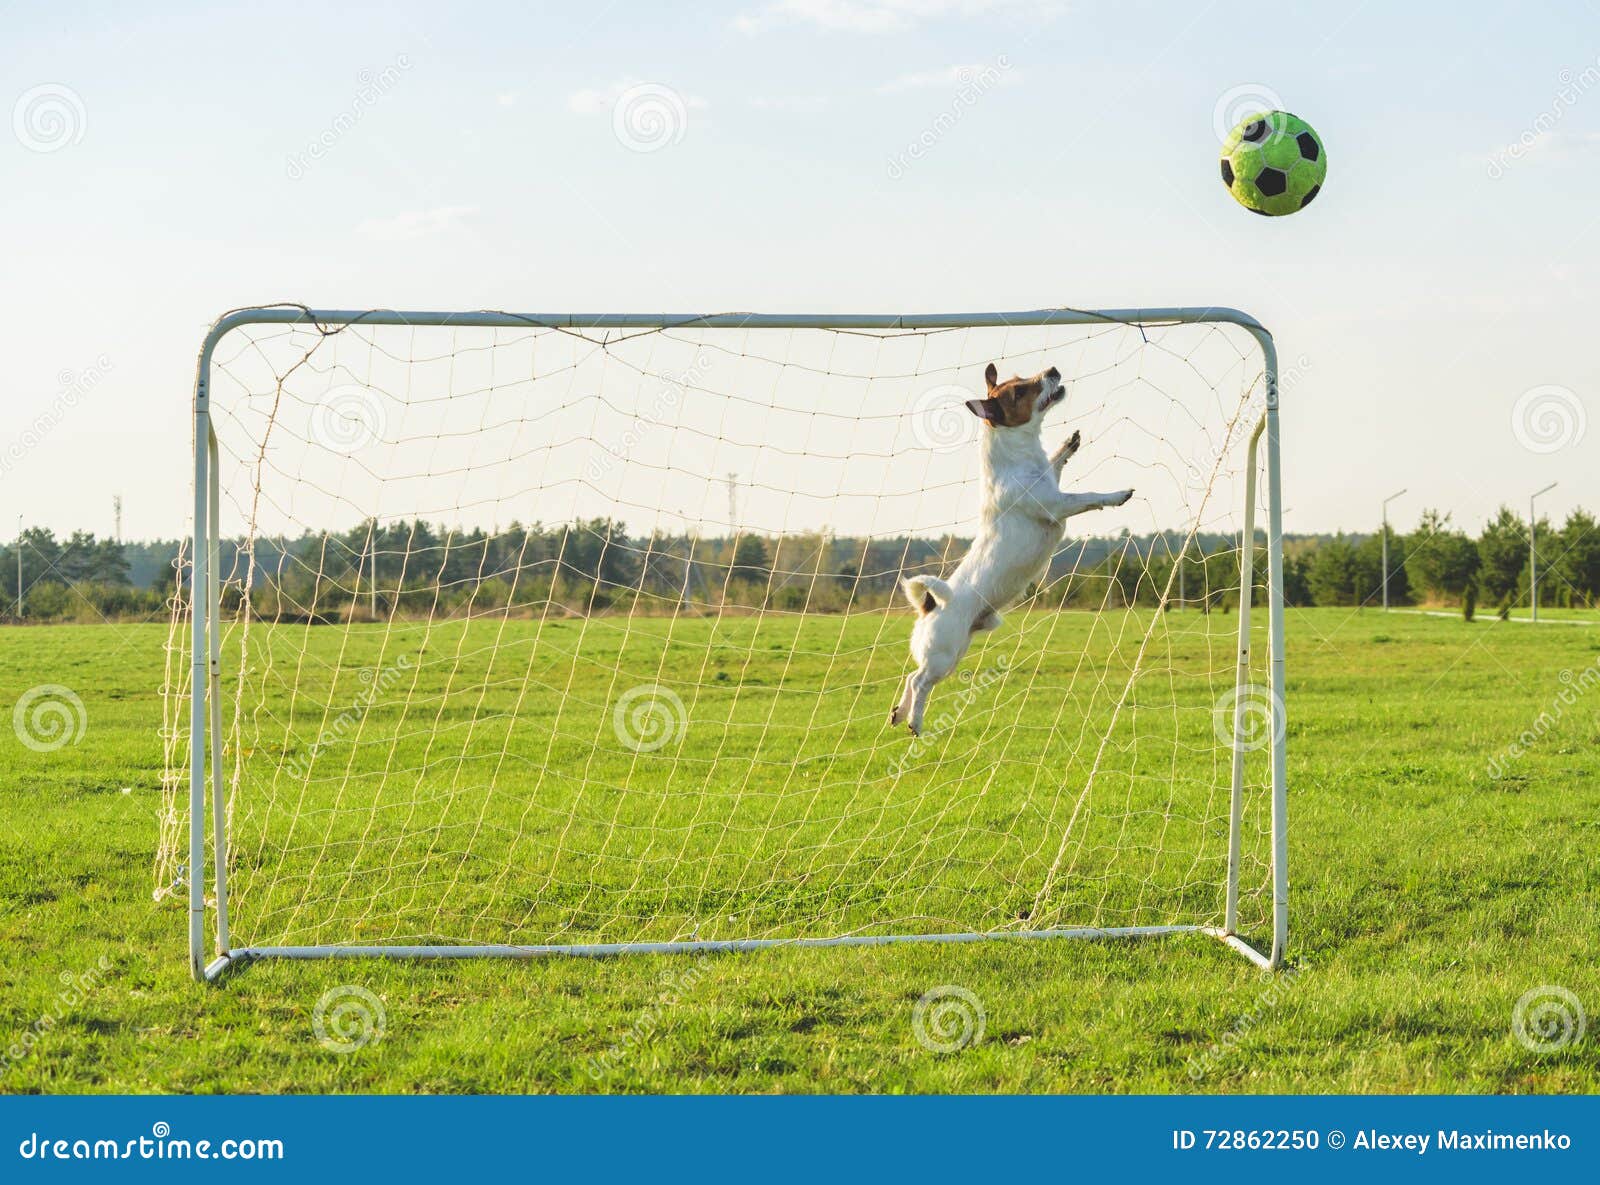 Funny Soccer Football Goalie Keeper Saving a Goal Stock Photo - Image of  jumping, scoring: 72862250